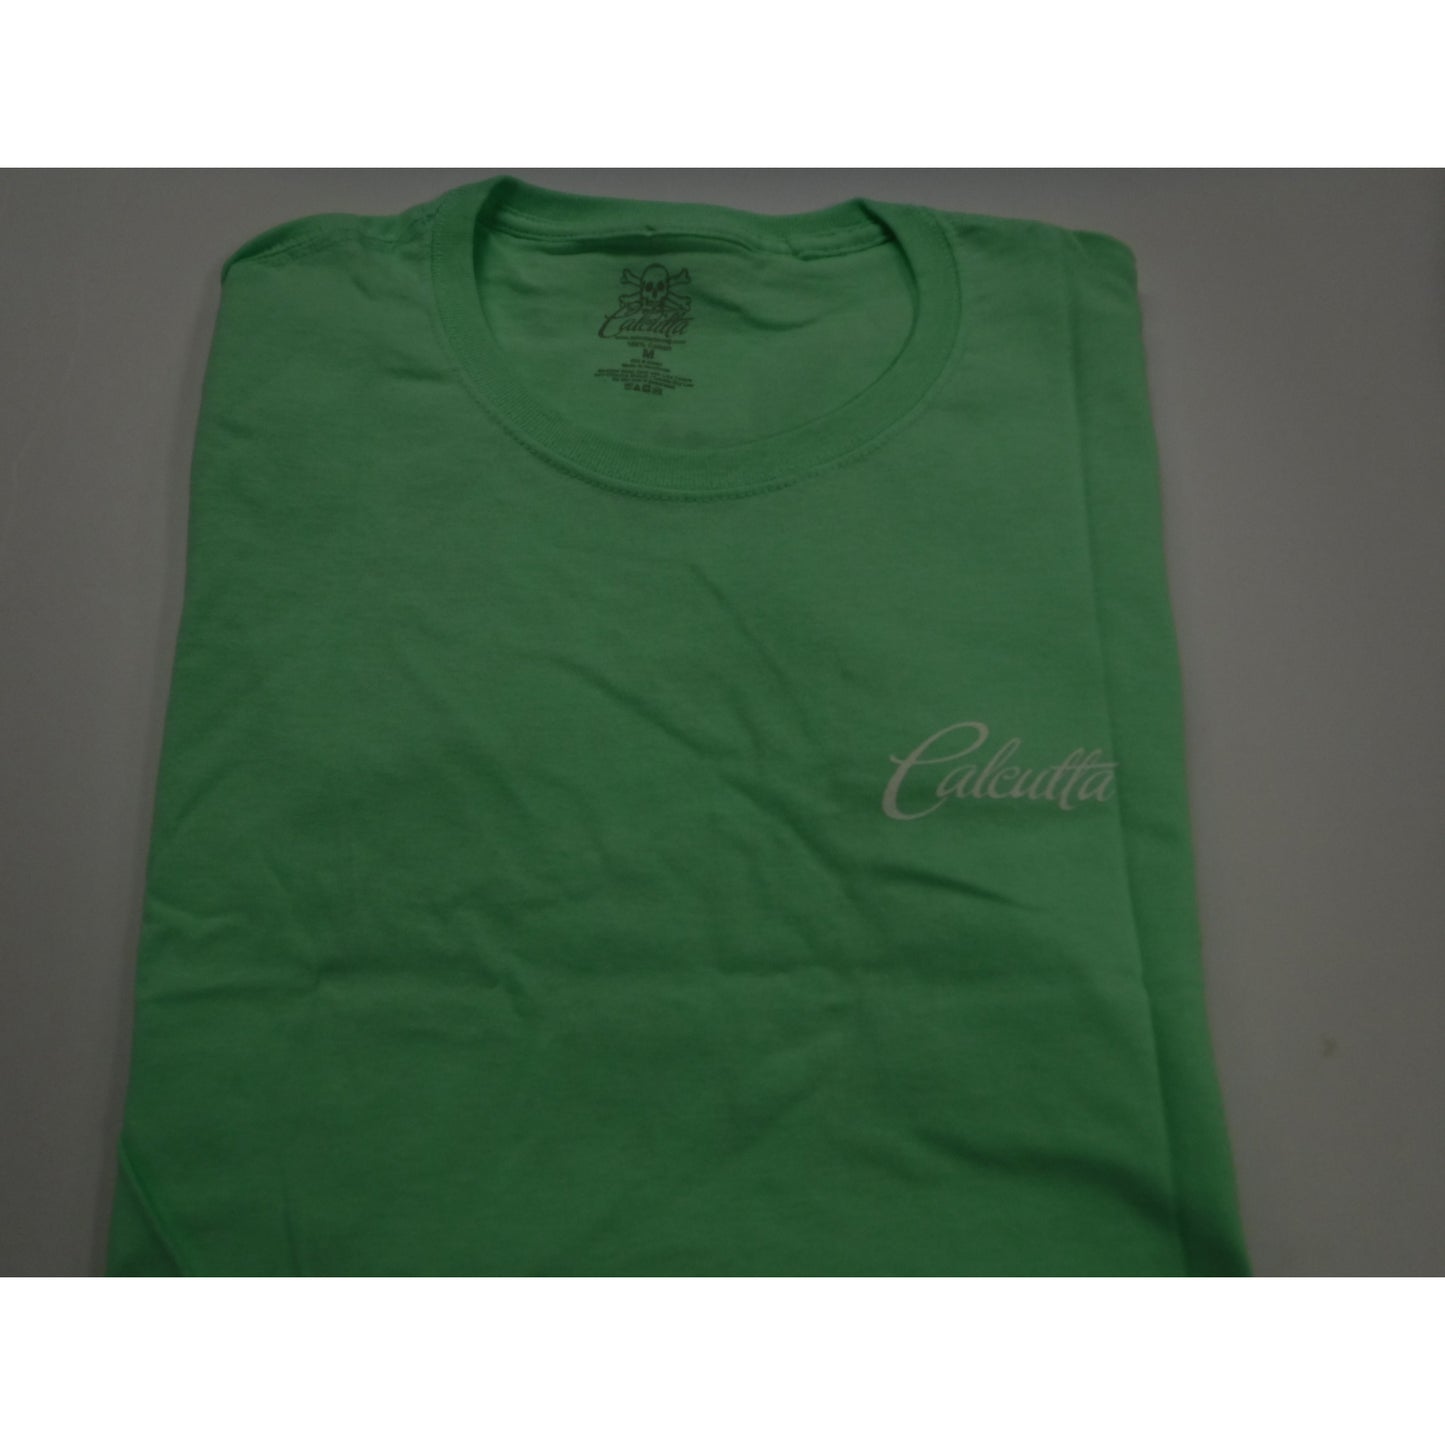 New Authentic Calcutta Short Sleeve Shirt Mint Green/ Back Salty-Sandy-Sassy Medium